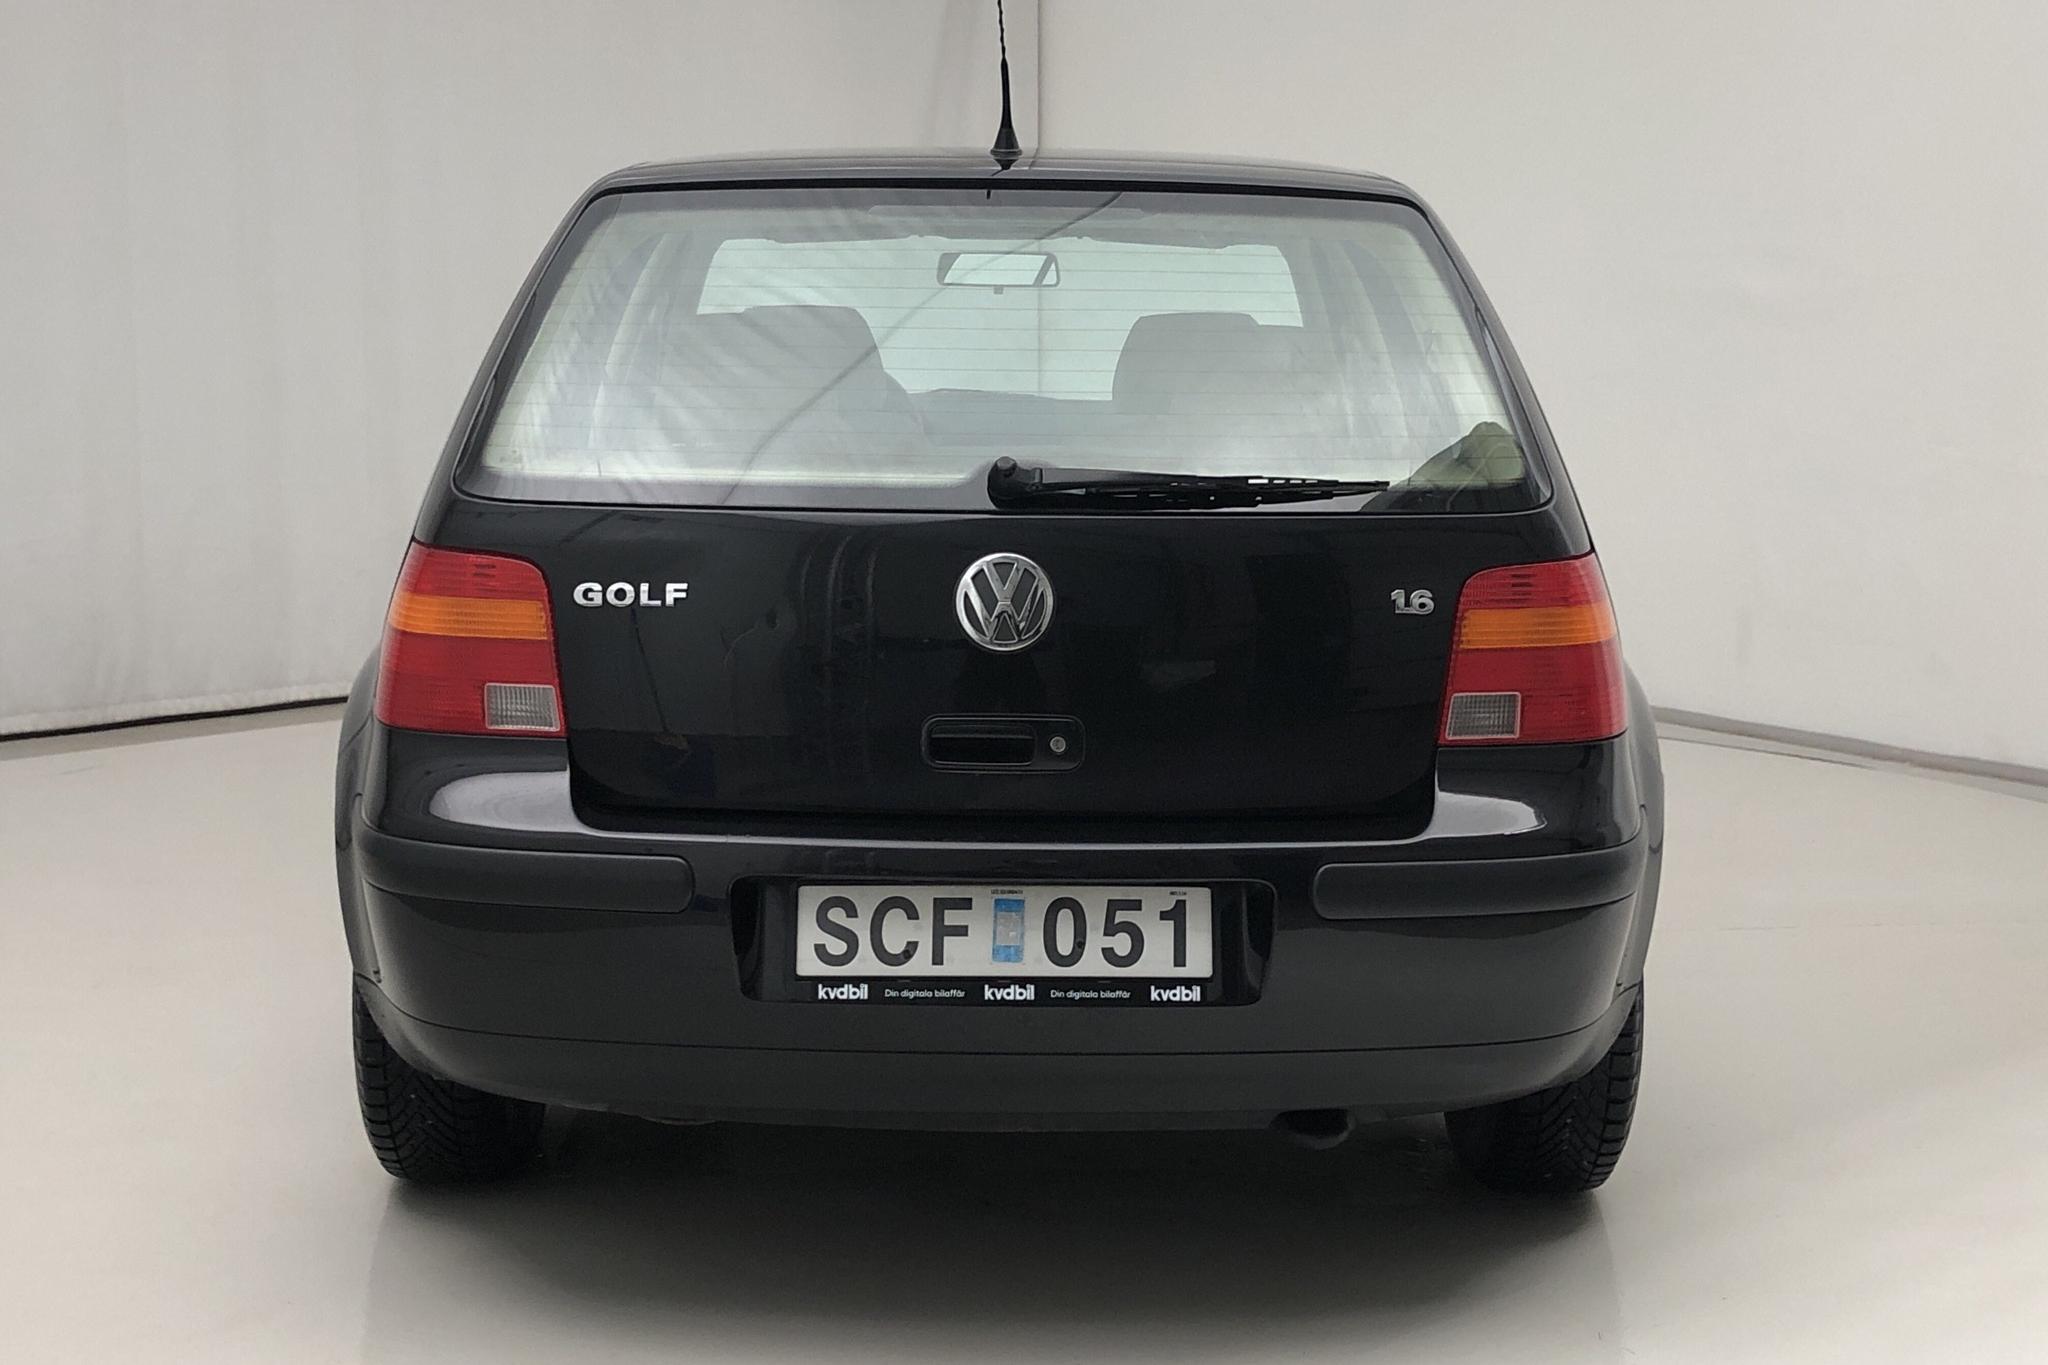 VW Golf IV 1.6 5dr (105hk) - 153 170 km - Manual - black - 2001